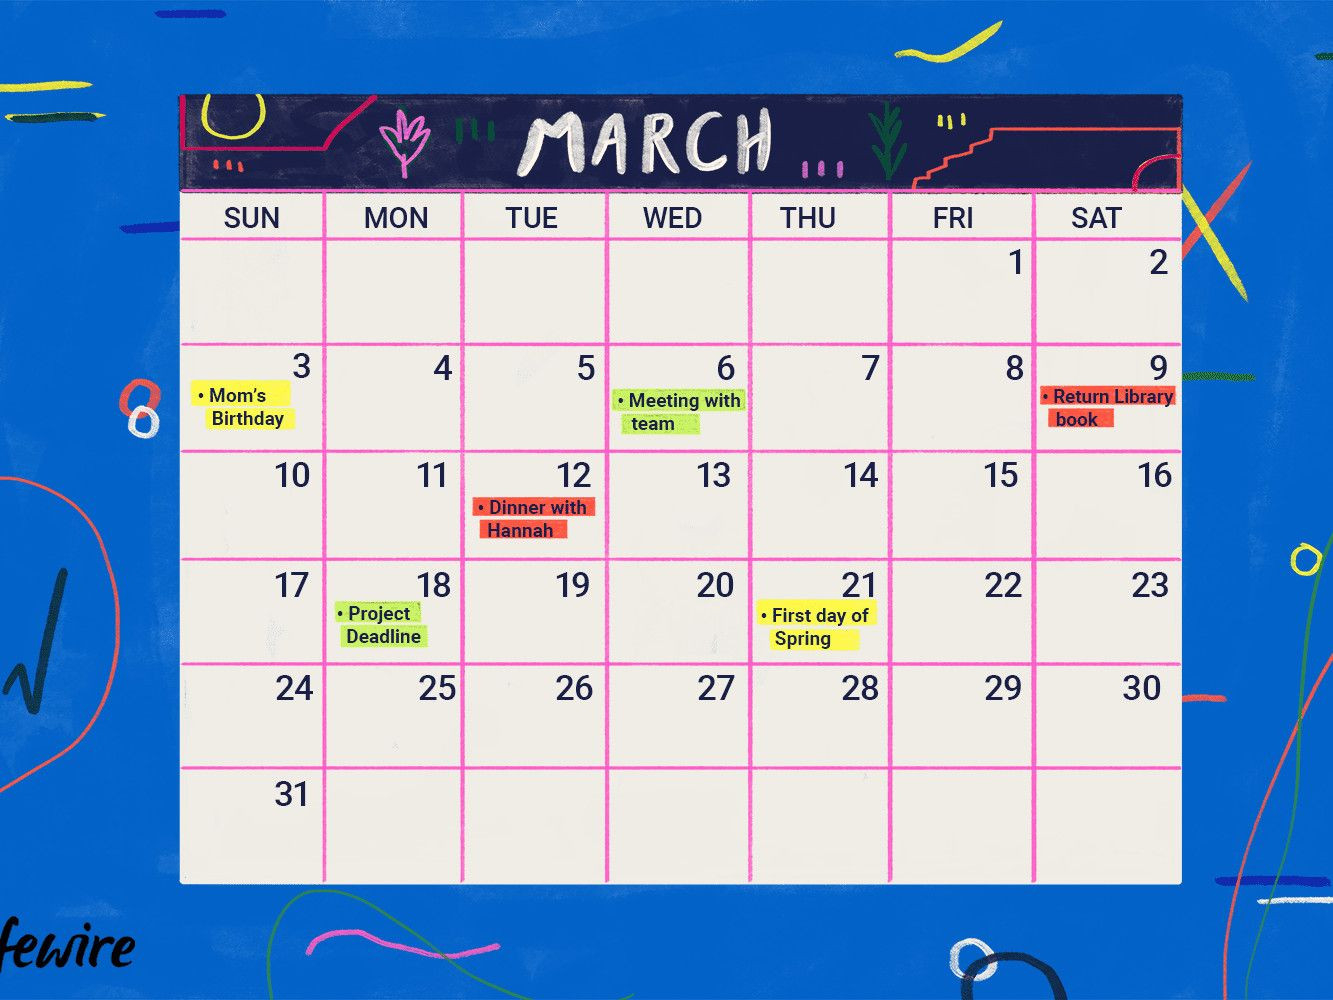 25 Color Coded Calendar Template In 2020 | Calendar  Free Printable Event Calendar Template